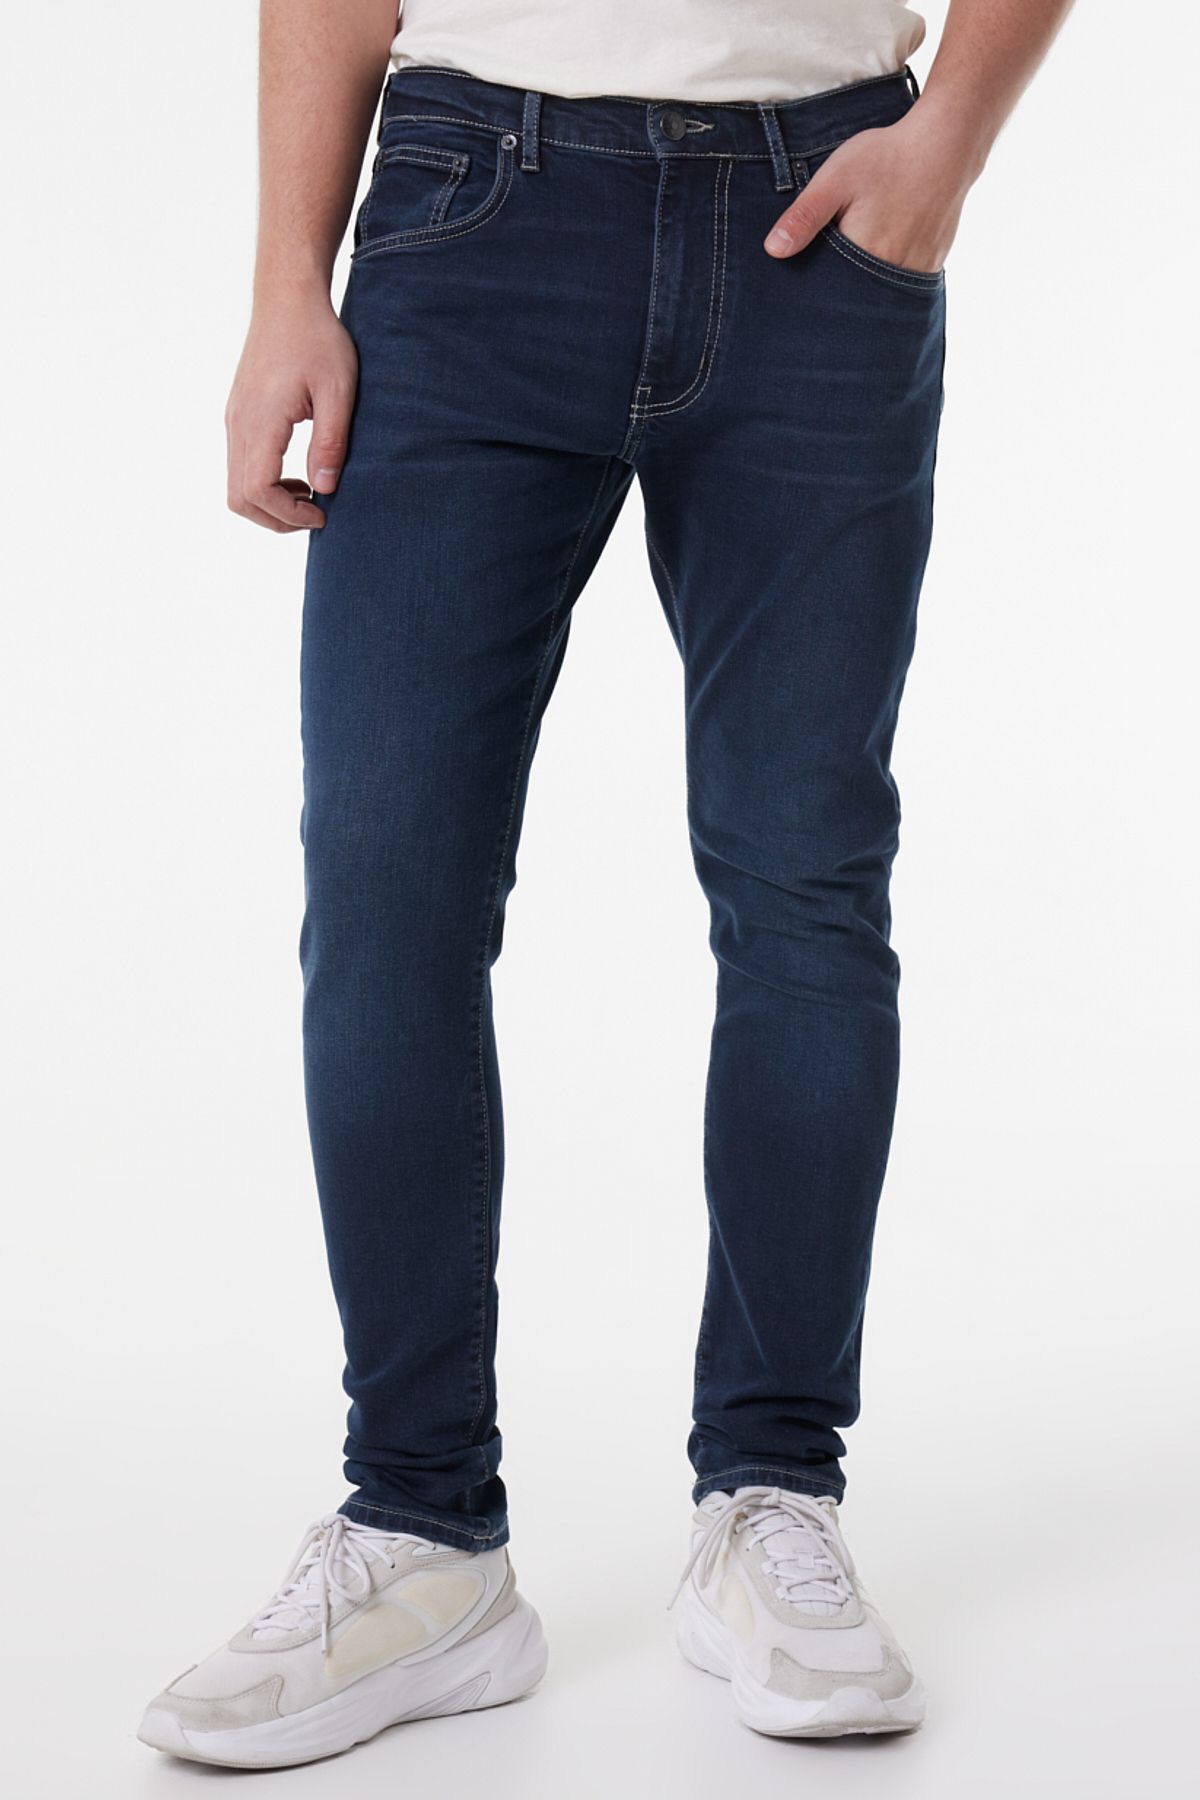 Redbat Men's Light Blue Super Skinny Jeans 